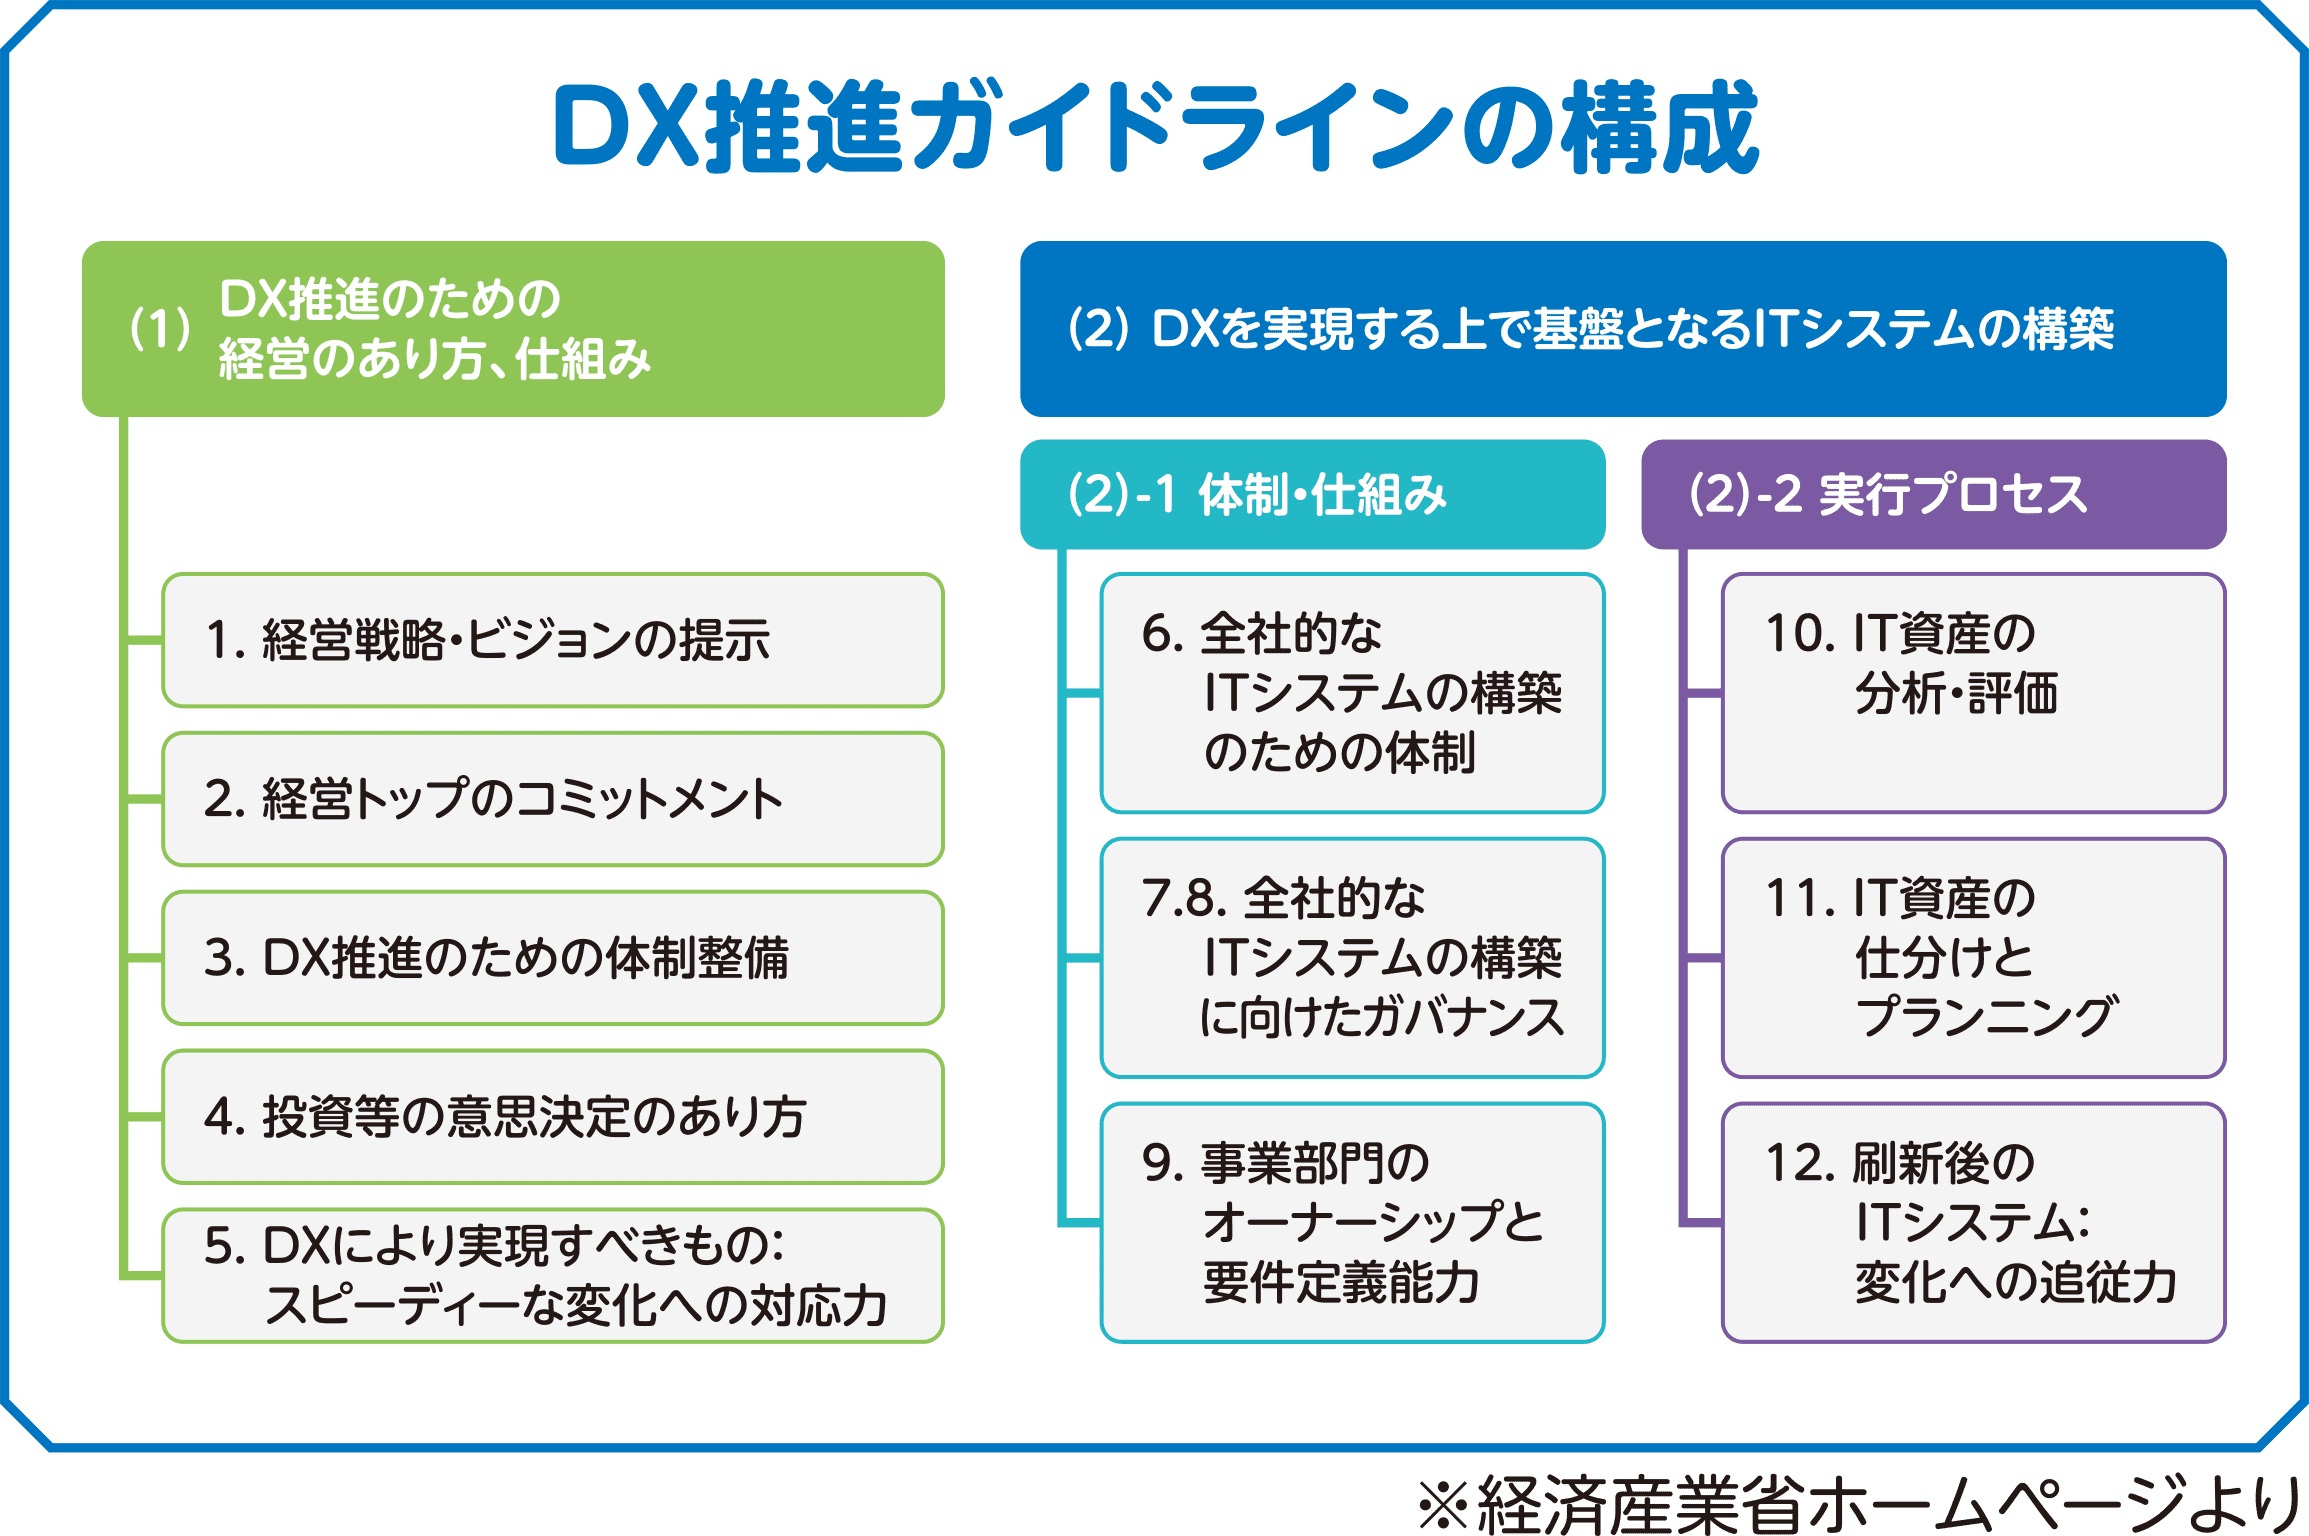 DX推奨ガイドラインの構成